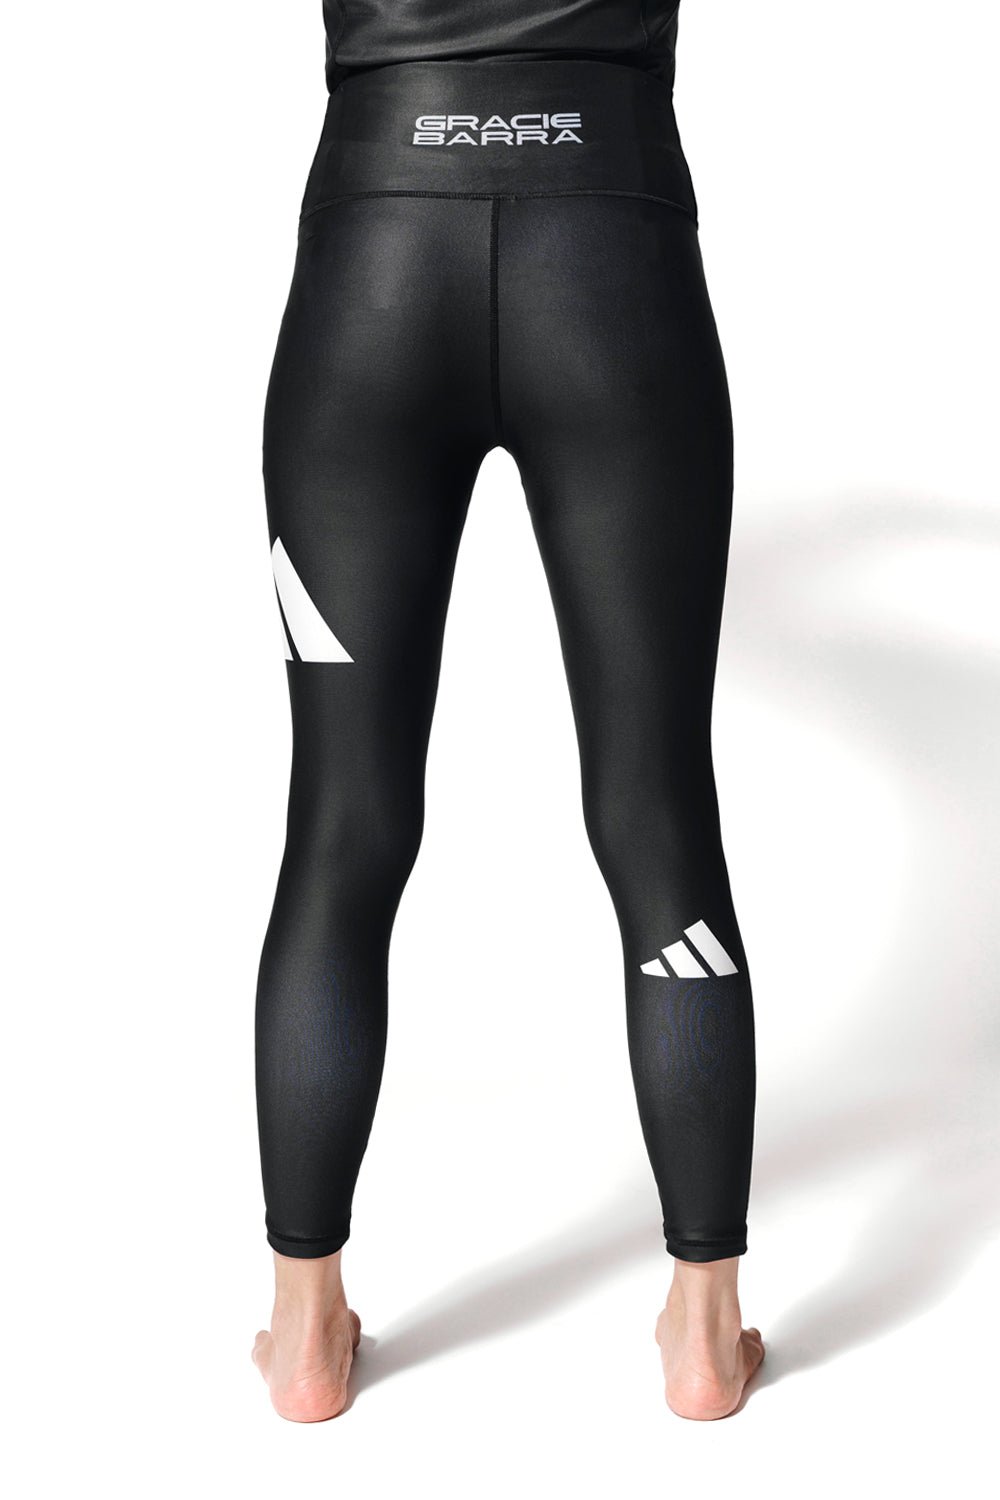 Womens Barra Performance Compression Pants by adidas® - Black – GB